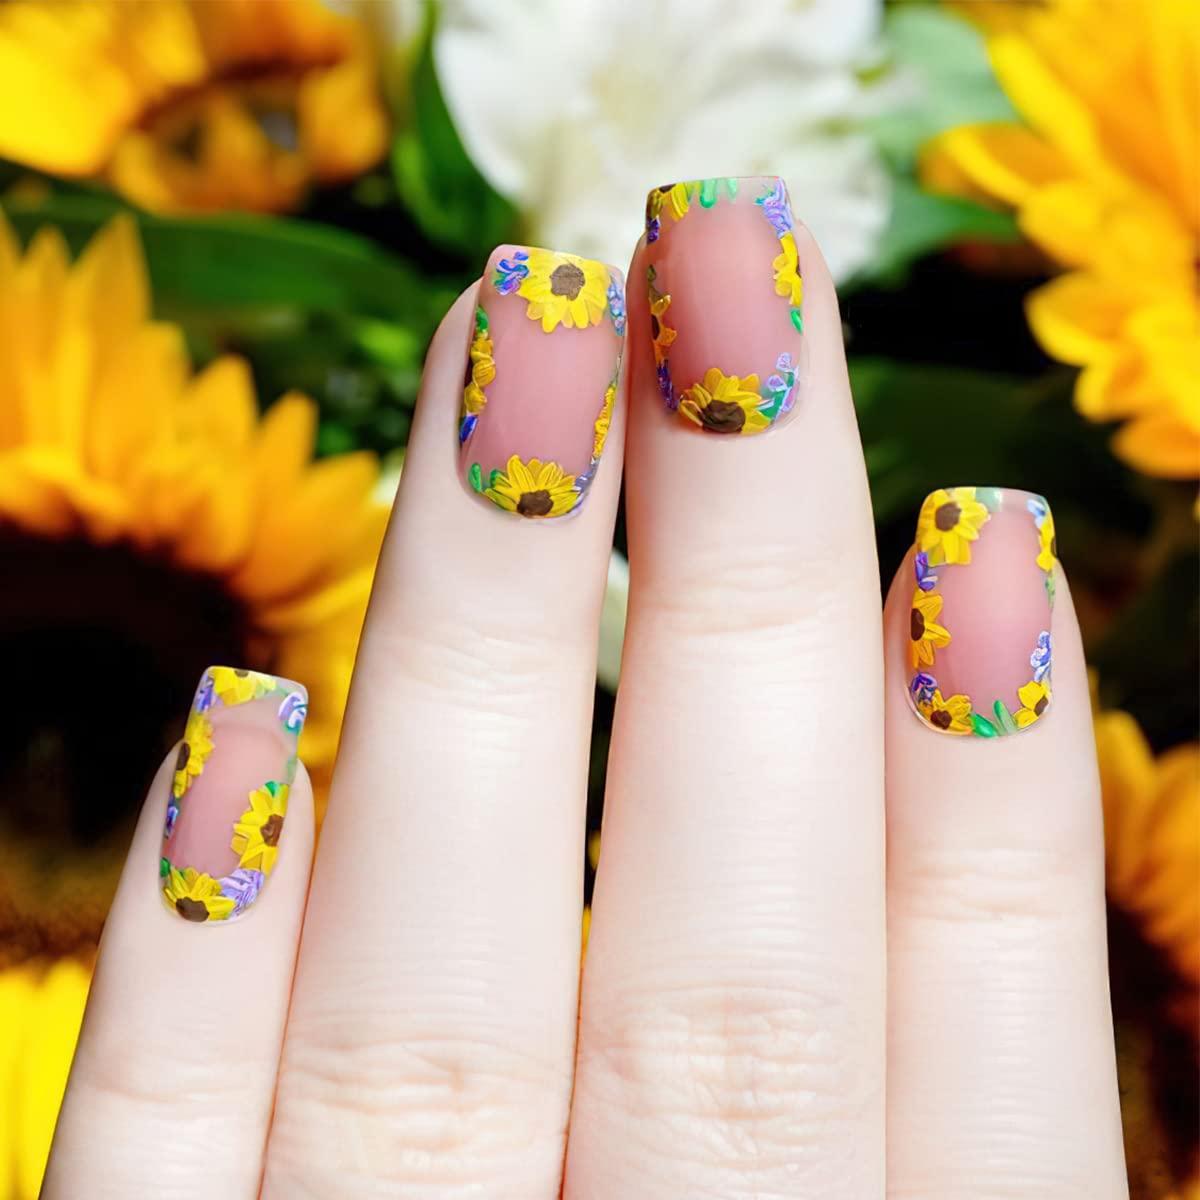 Sunflower Nails That Will Brighten Your Day | Bridal Shower 101